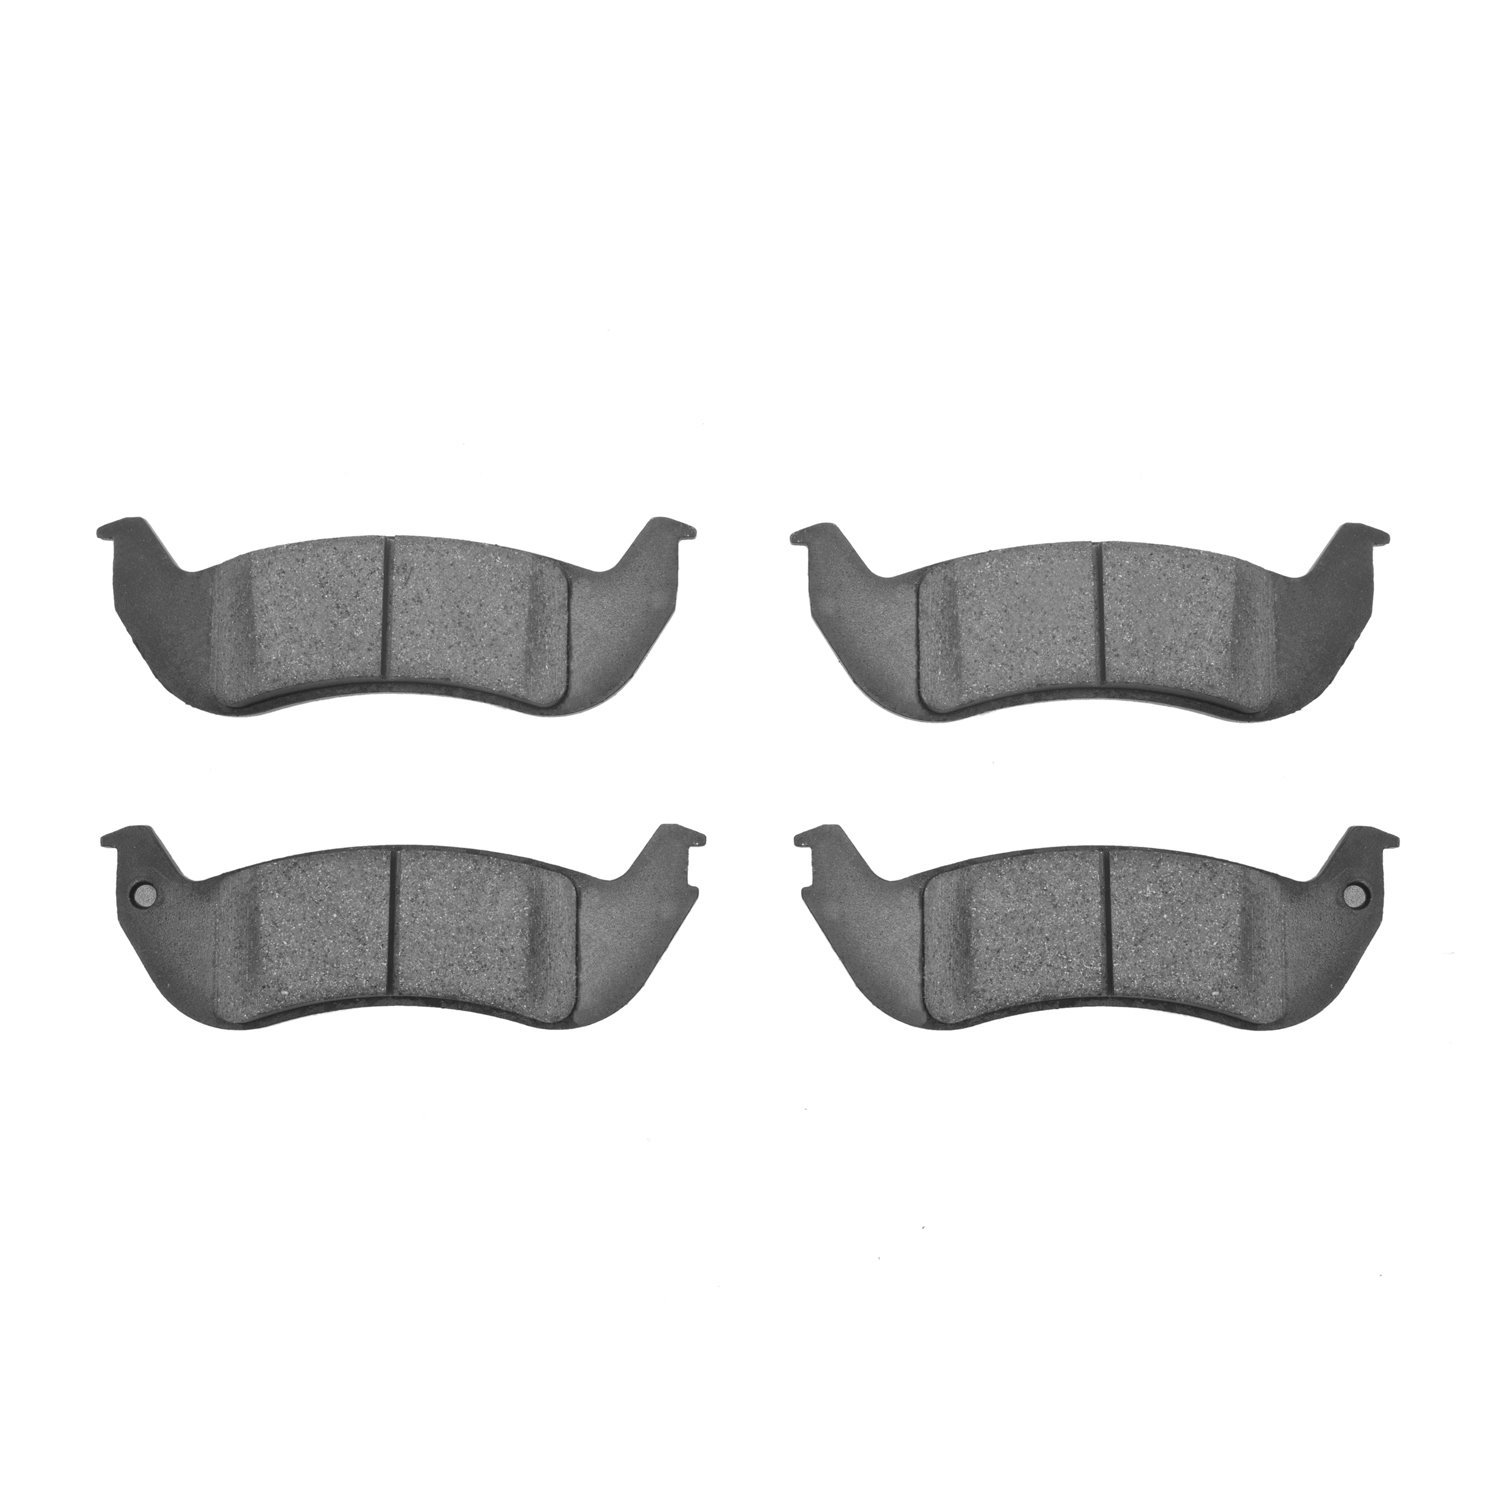 1310-0932-00 3000-Series Ceramic Brake Pads, 2003-2011 Ford/Lincoln/Mercury/Mazda, Position: Rear